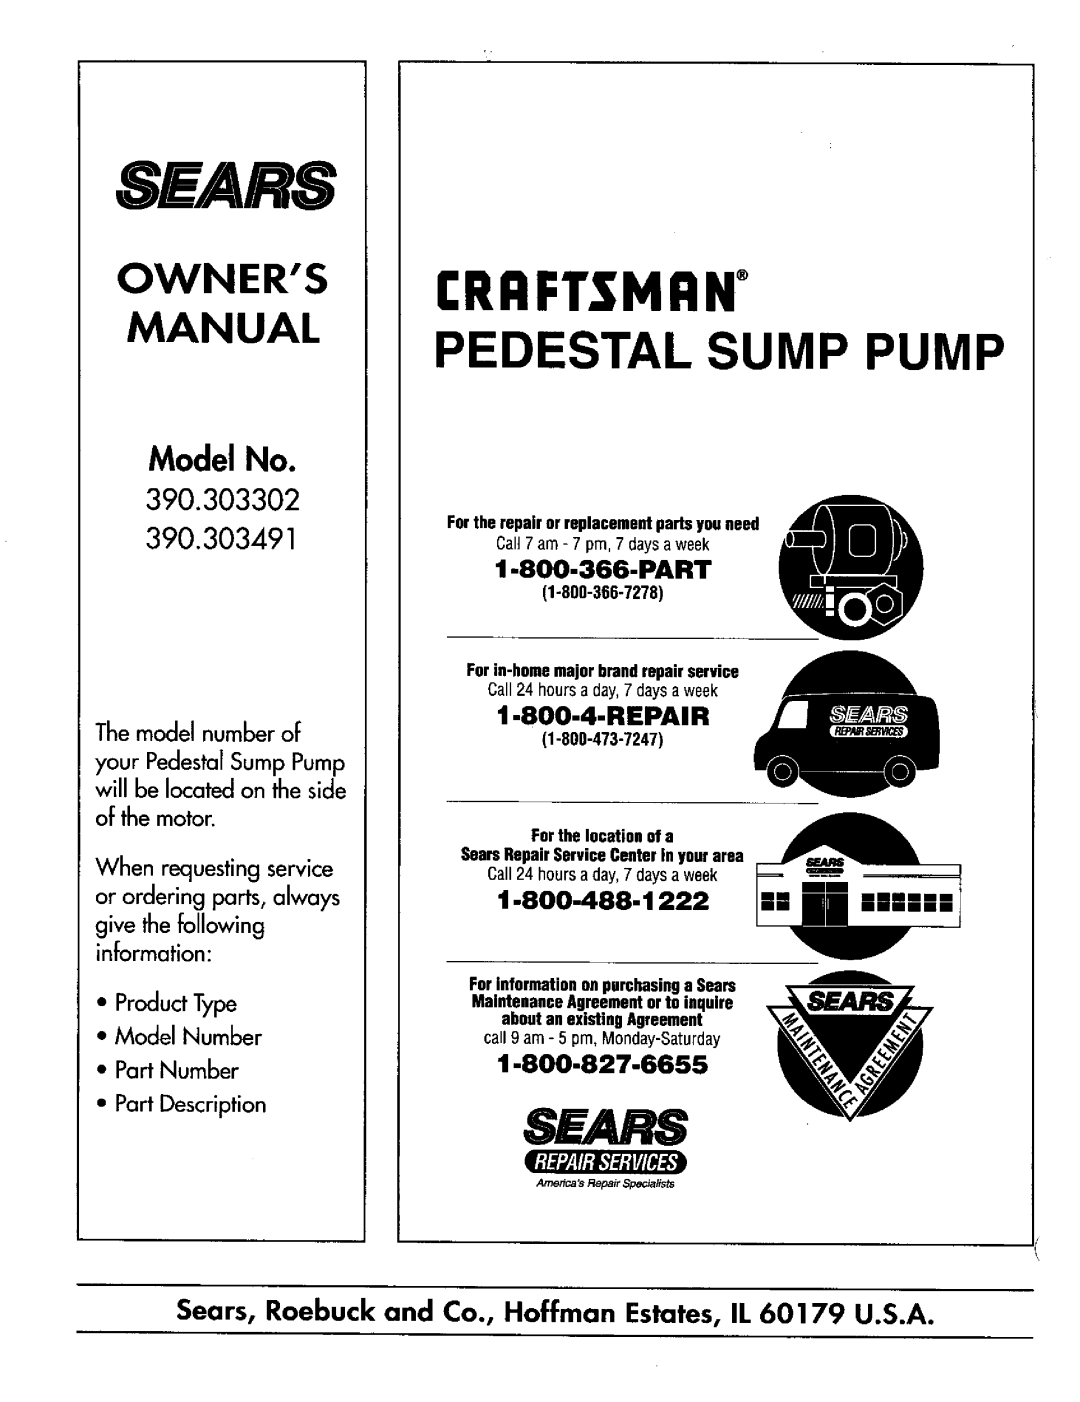 Sears owner manual Model No, Repair, Part, Sears, Irrftsmrn, Pedestal Sump Pump, Owners Manual, 390.303302 390.303491 